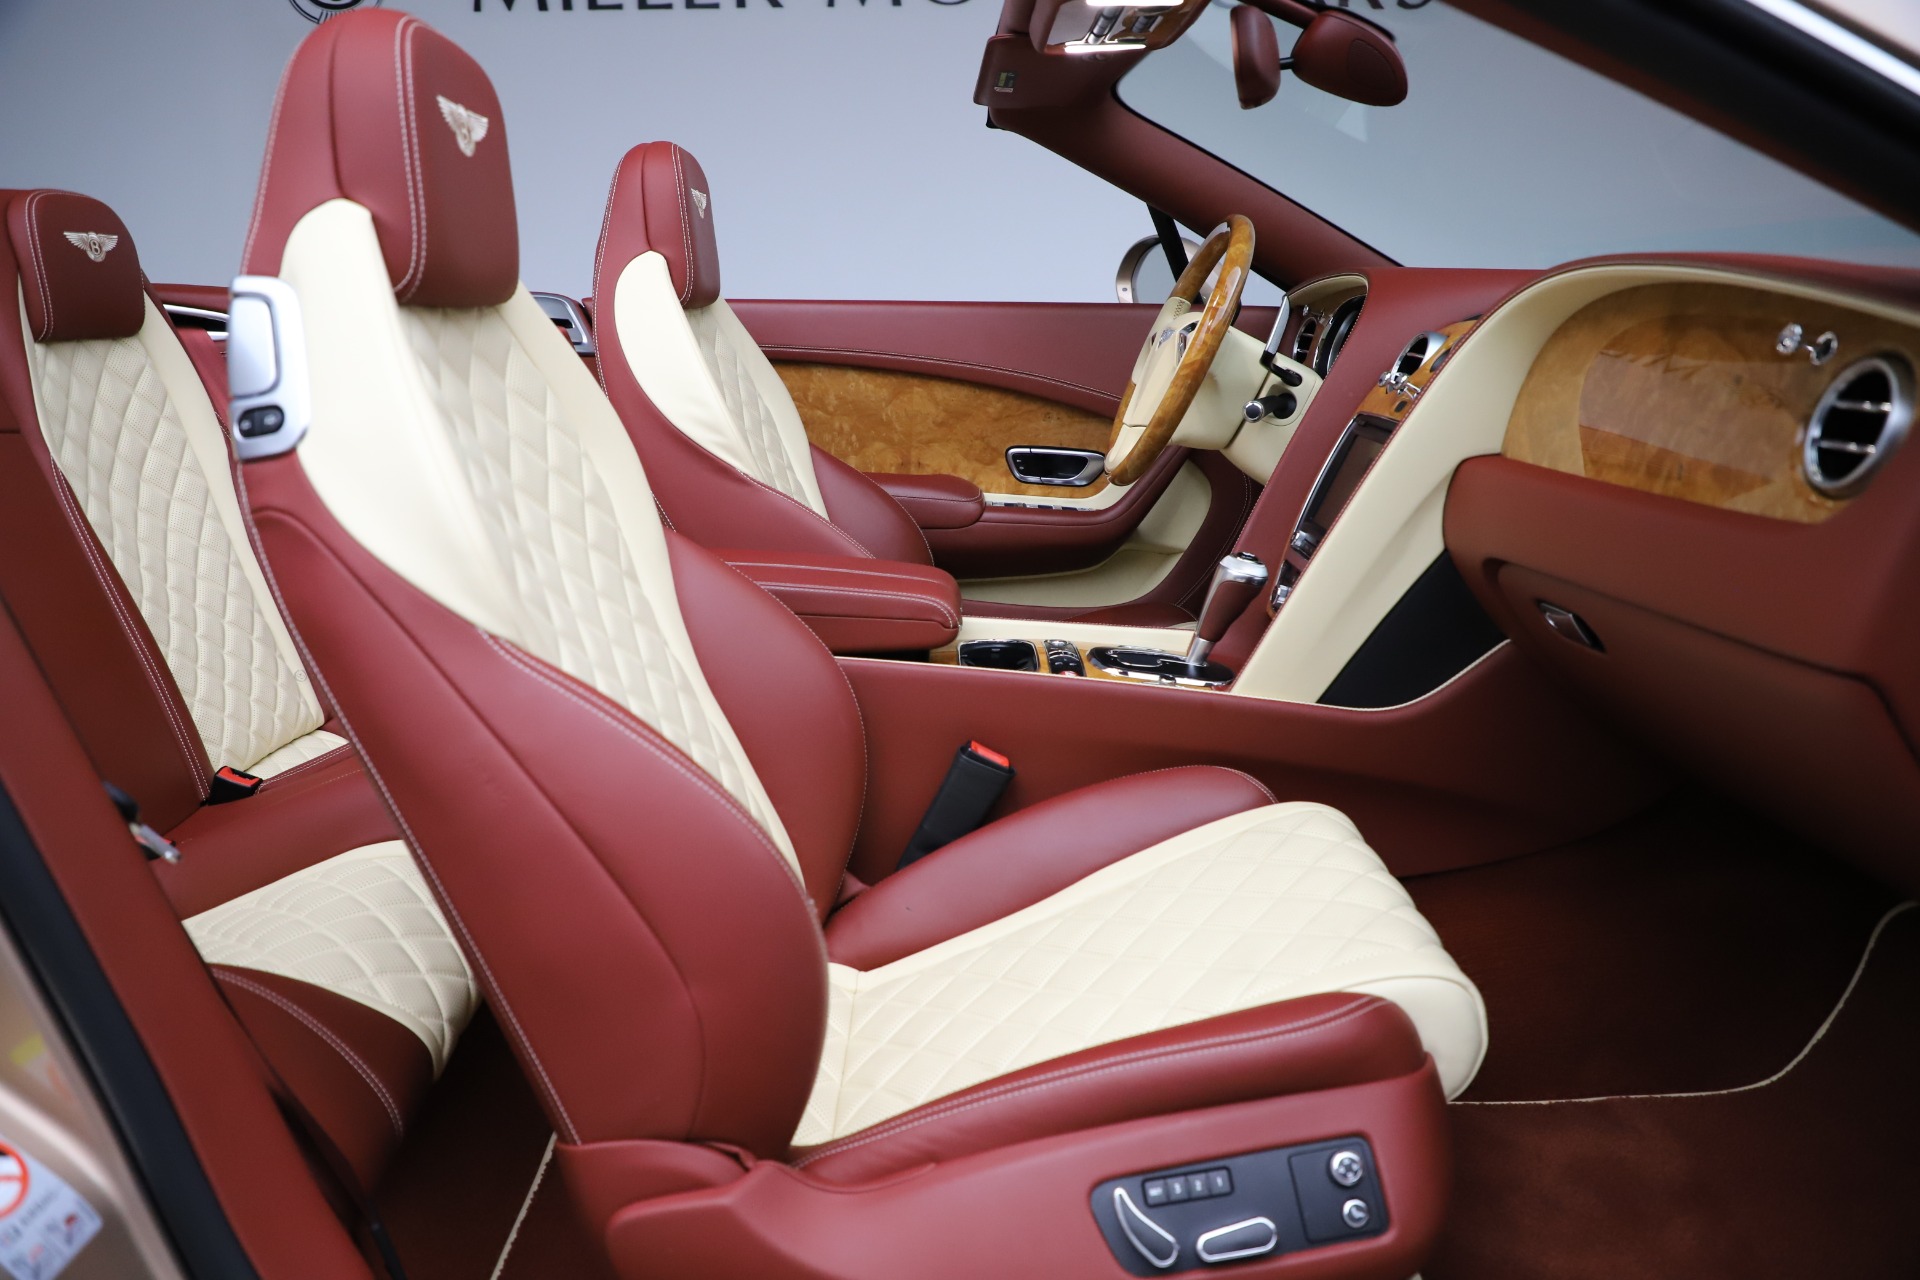 bentley concept cars interior